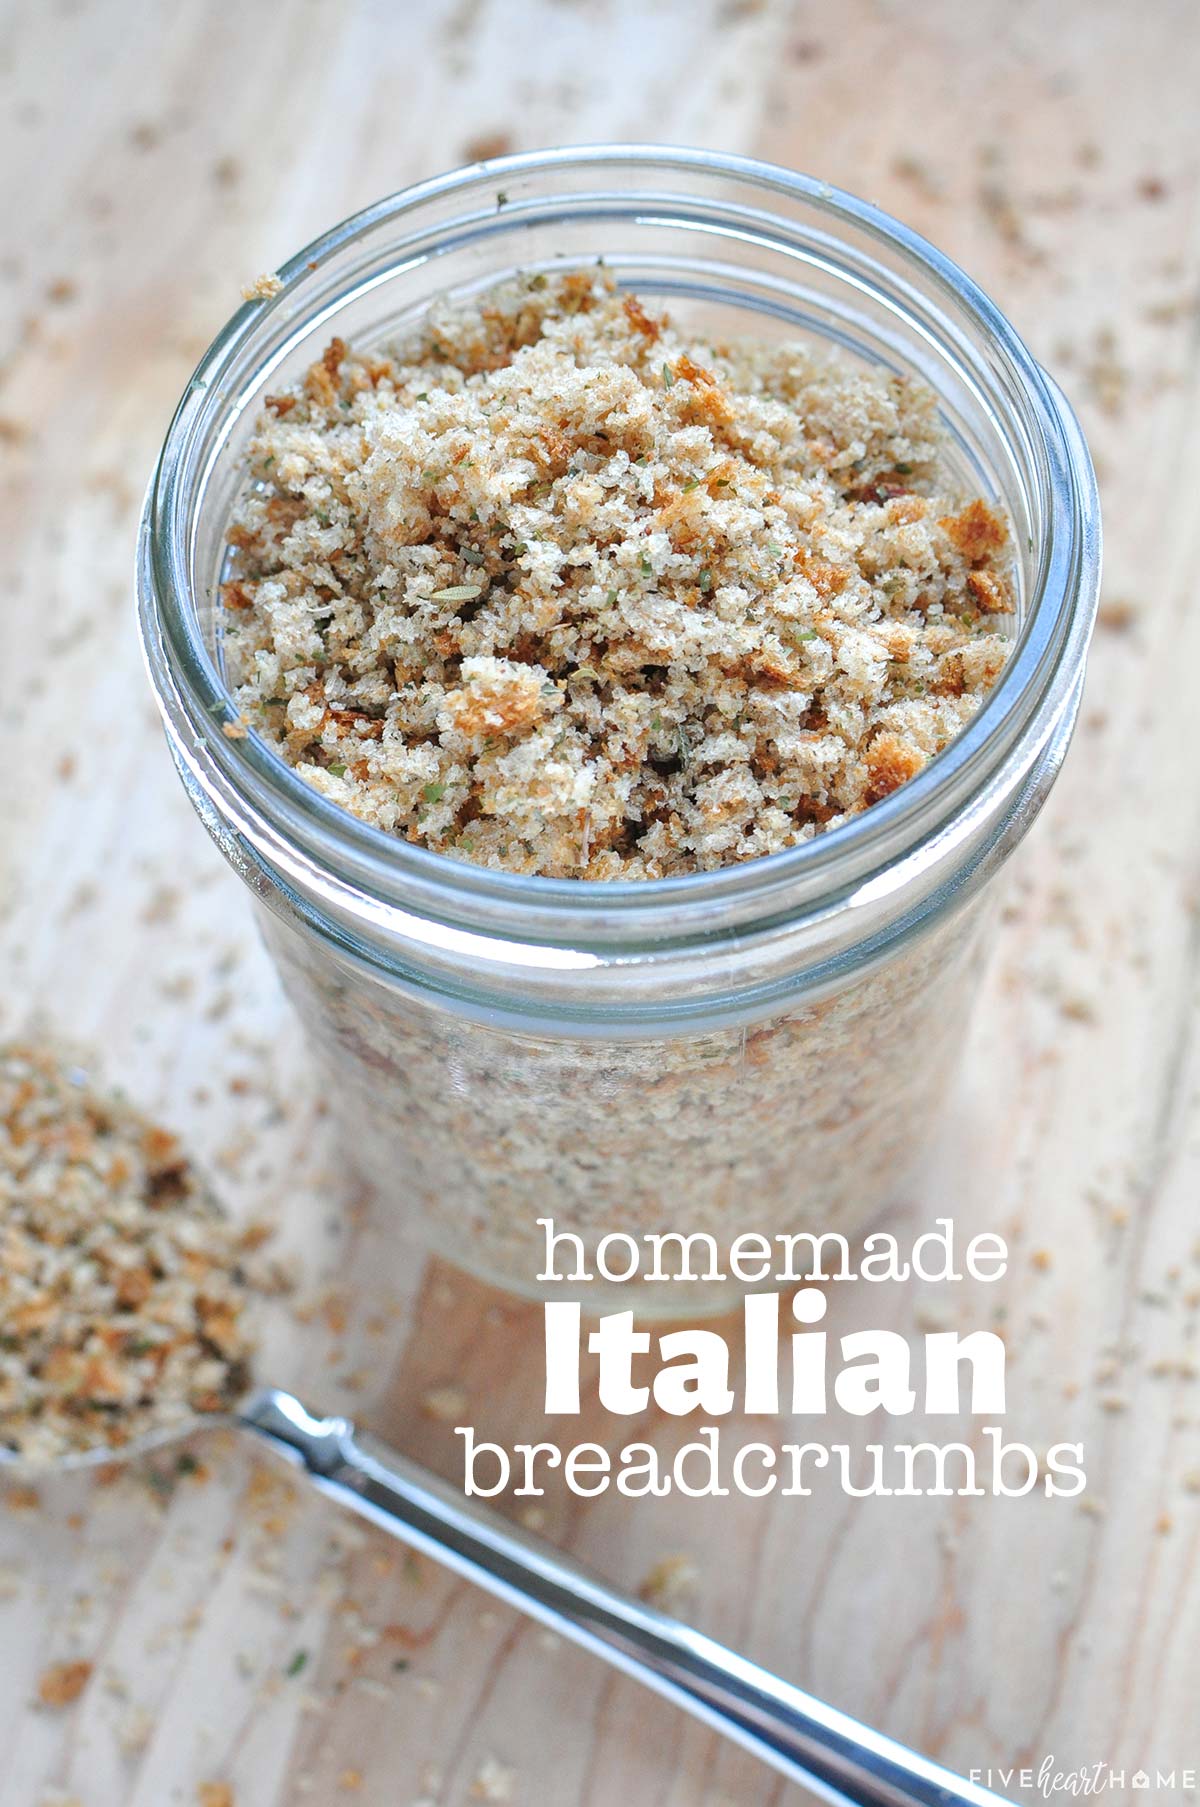 Homemade Italian Seasoning Blend - Simply Scratch